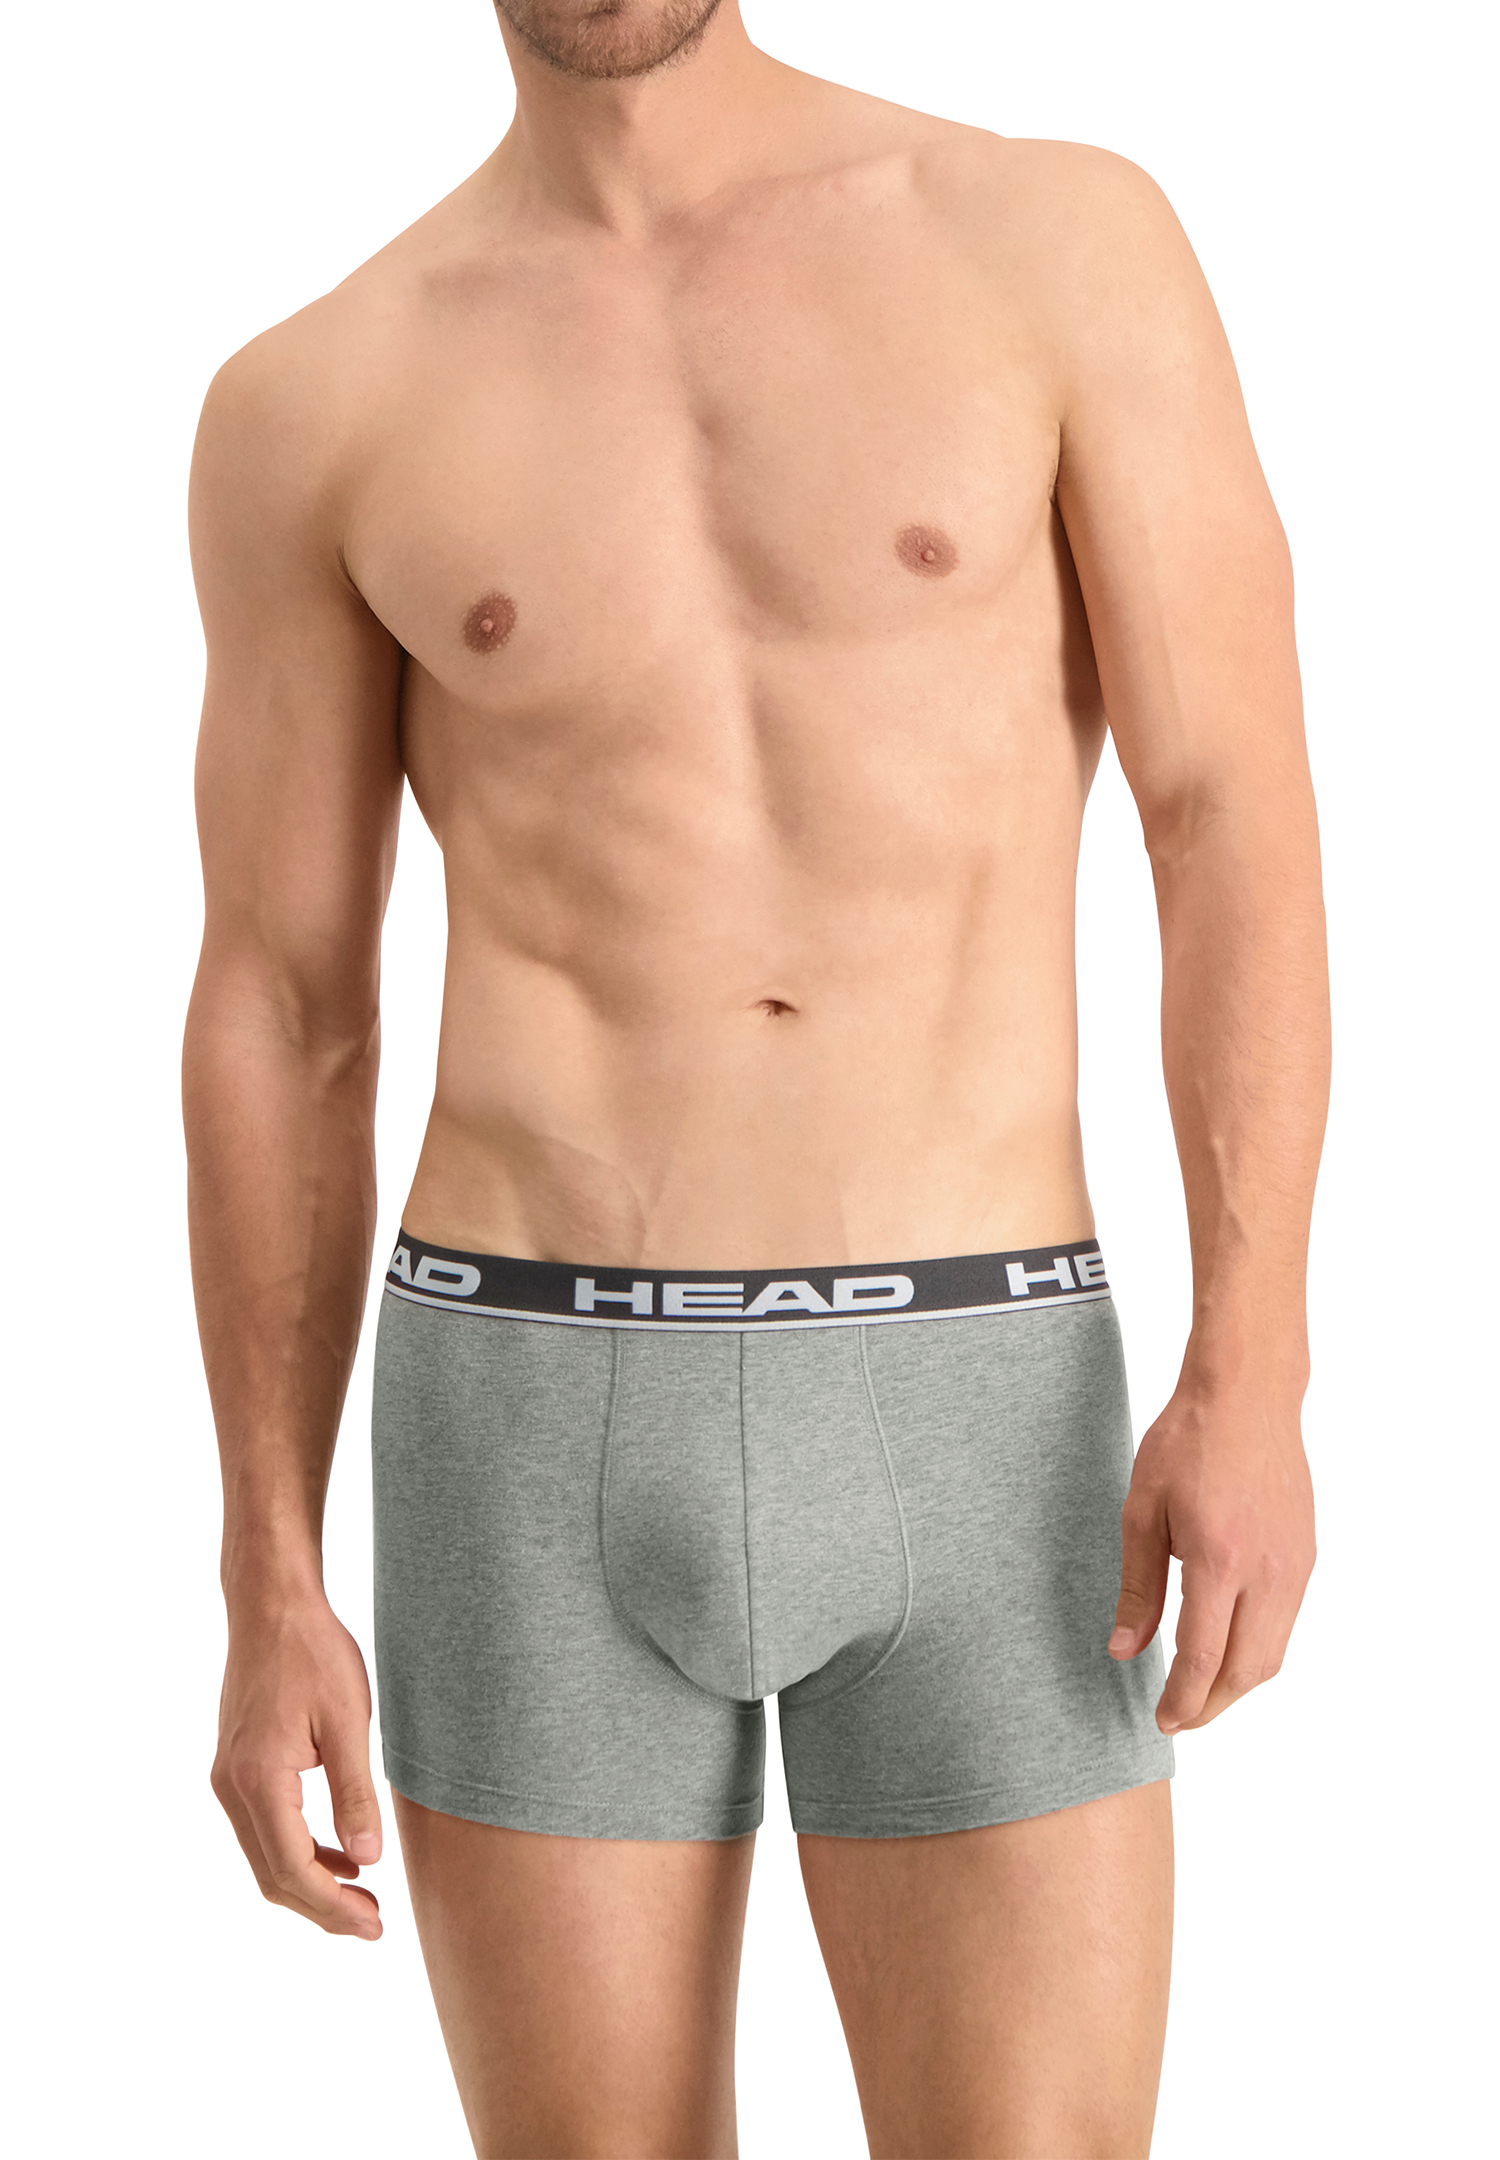 Head Herren Basic Boxer Pant Shorts Unterwäsche Unterhose 2 er Pack 